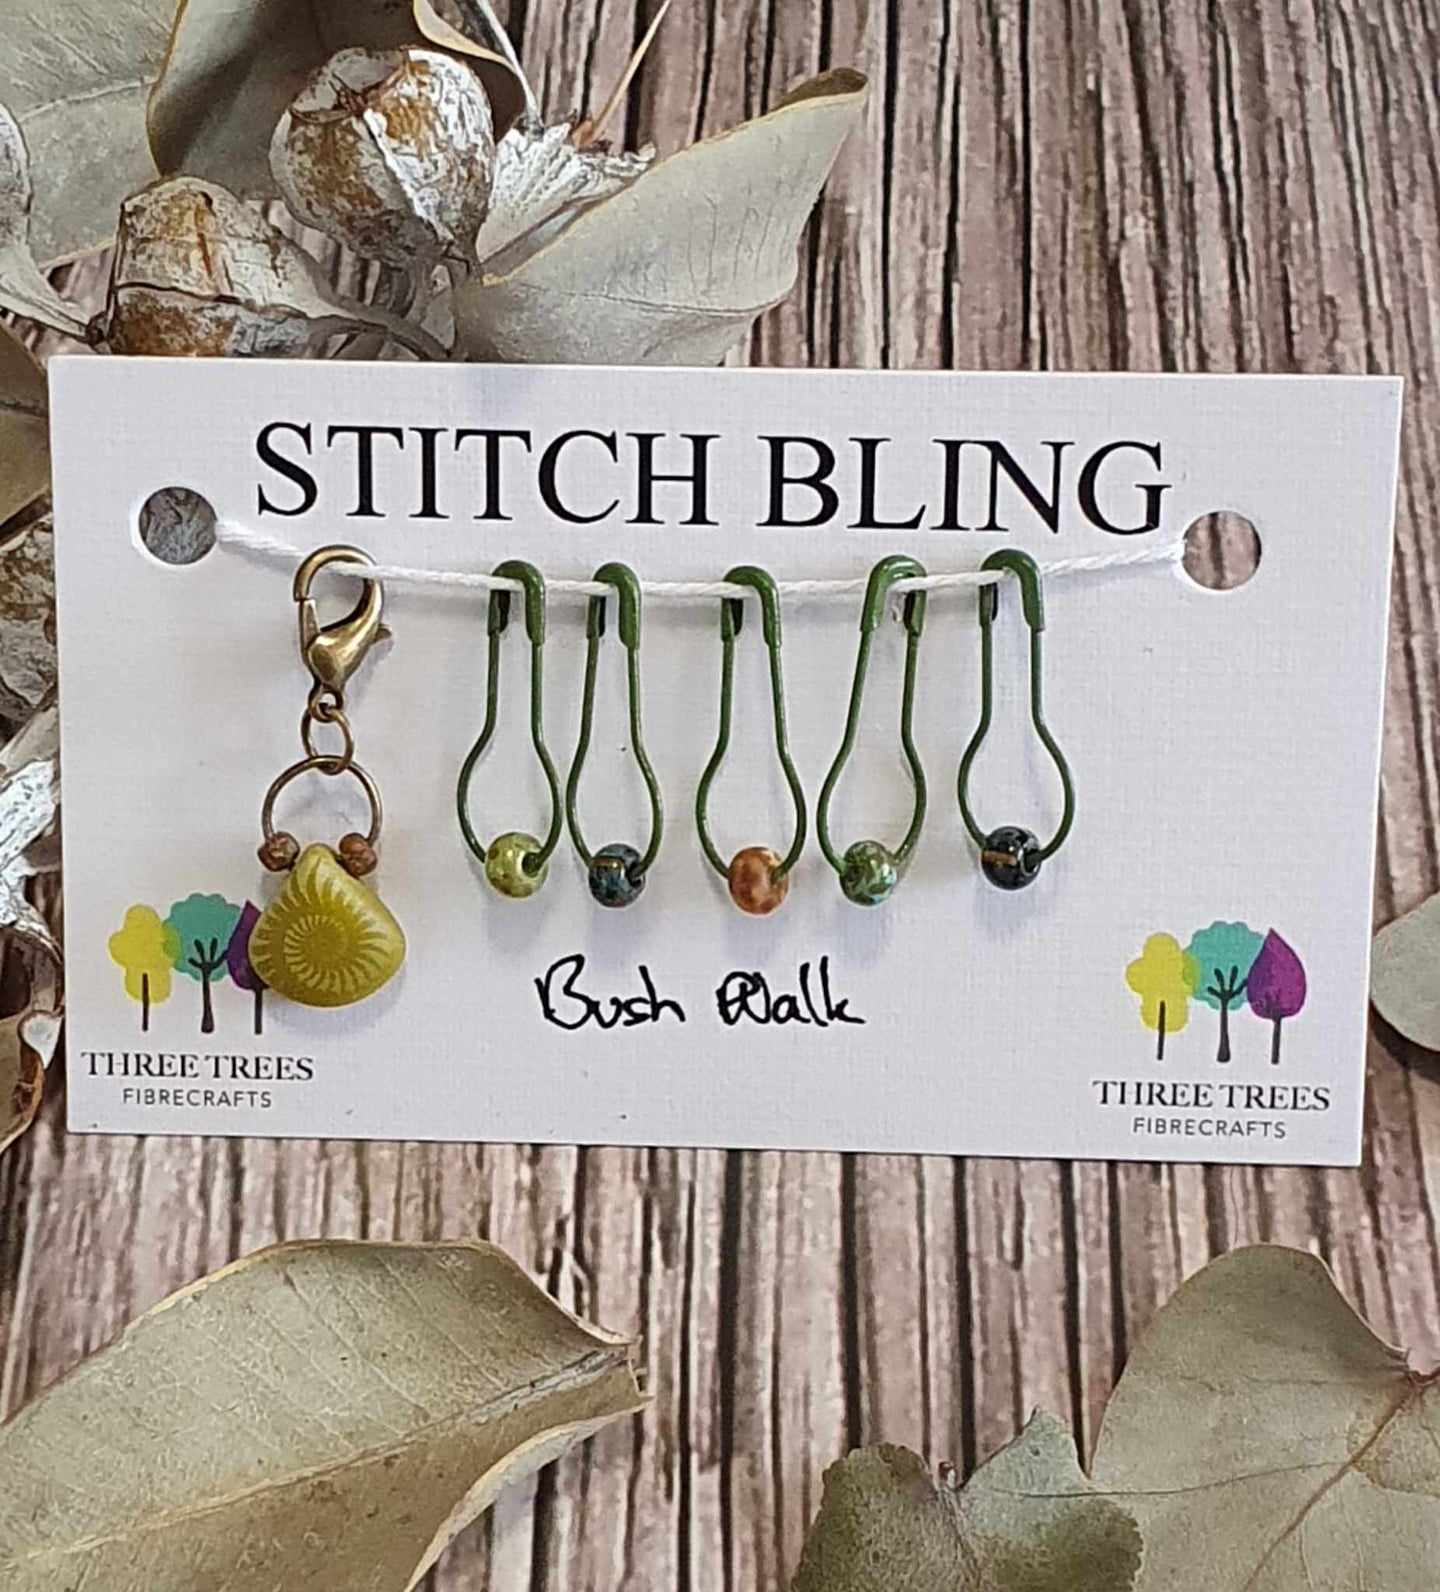 Bush Walk (Stitch Bling for Crochet)